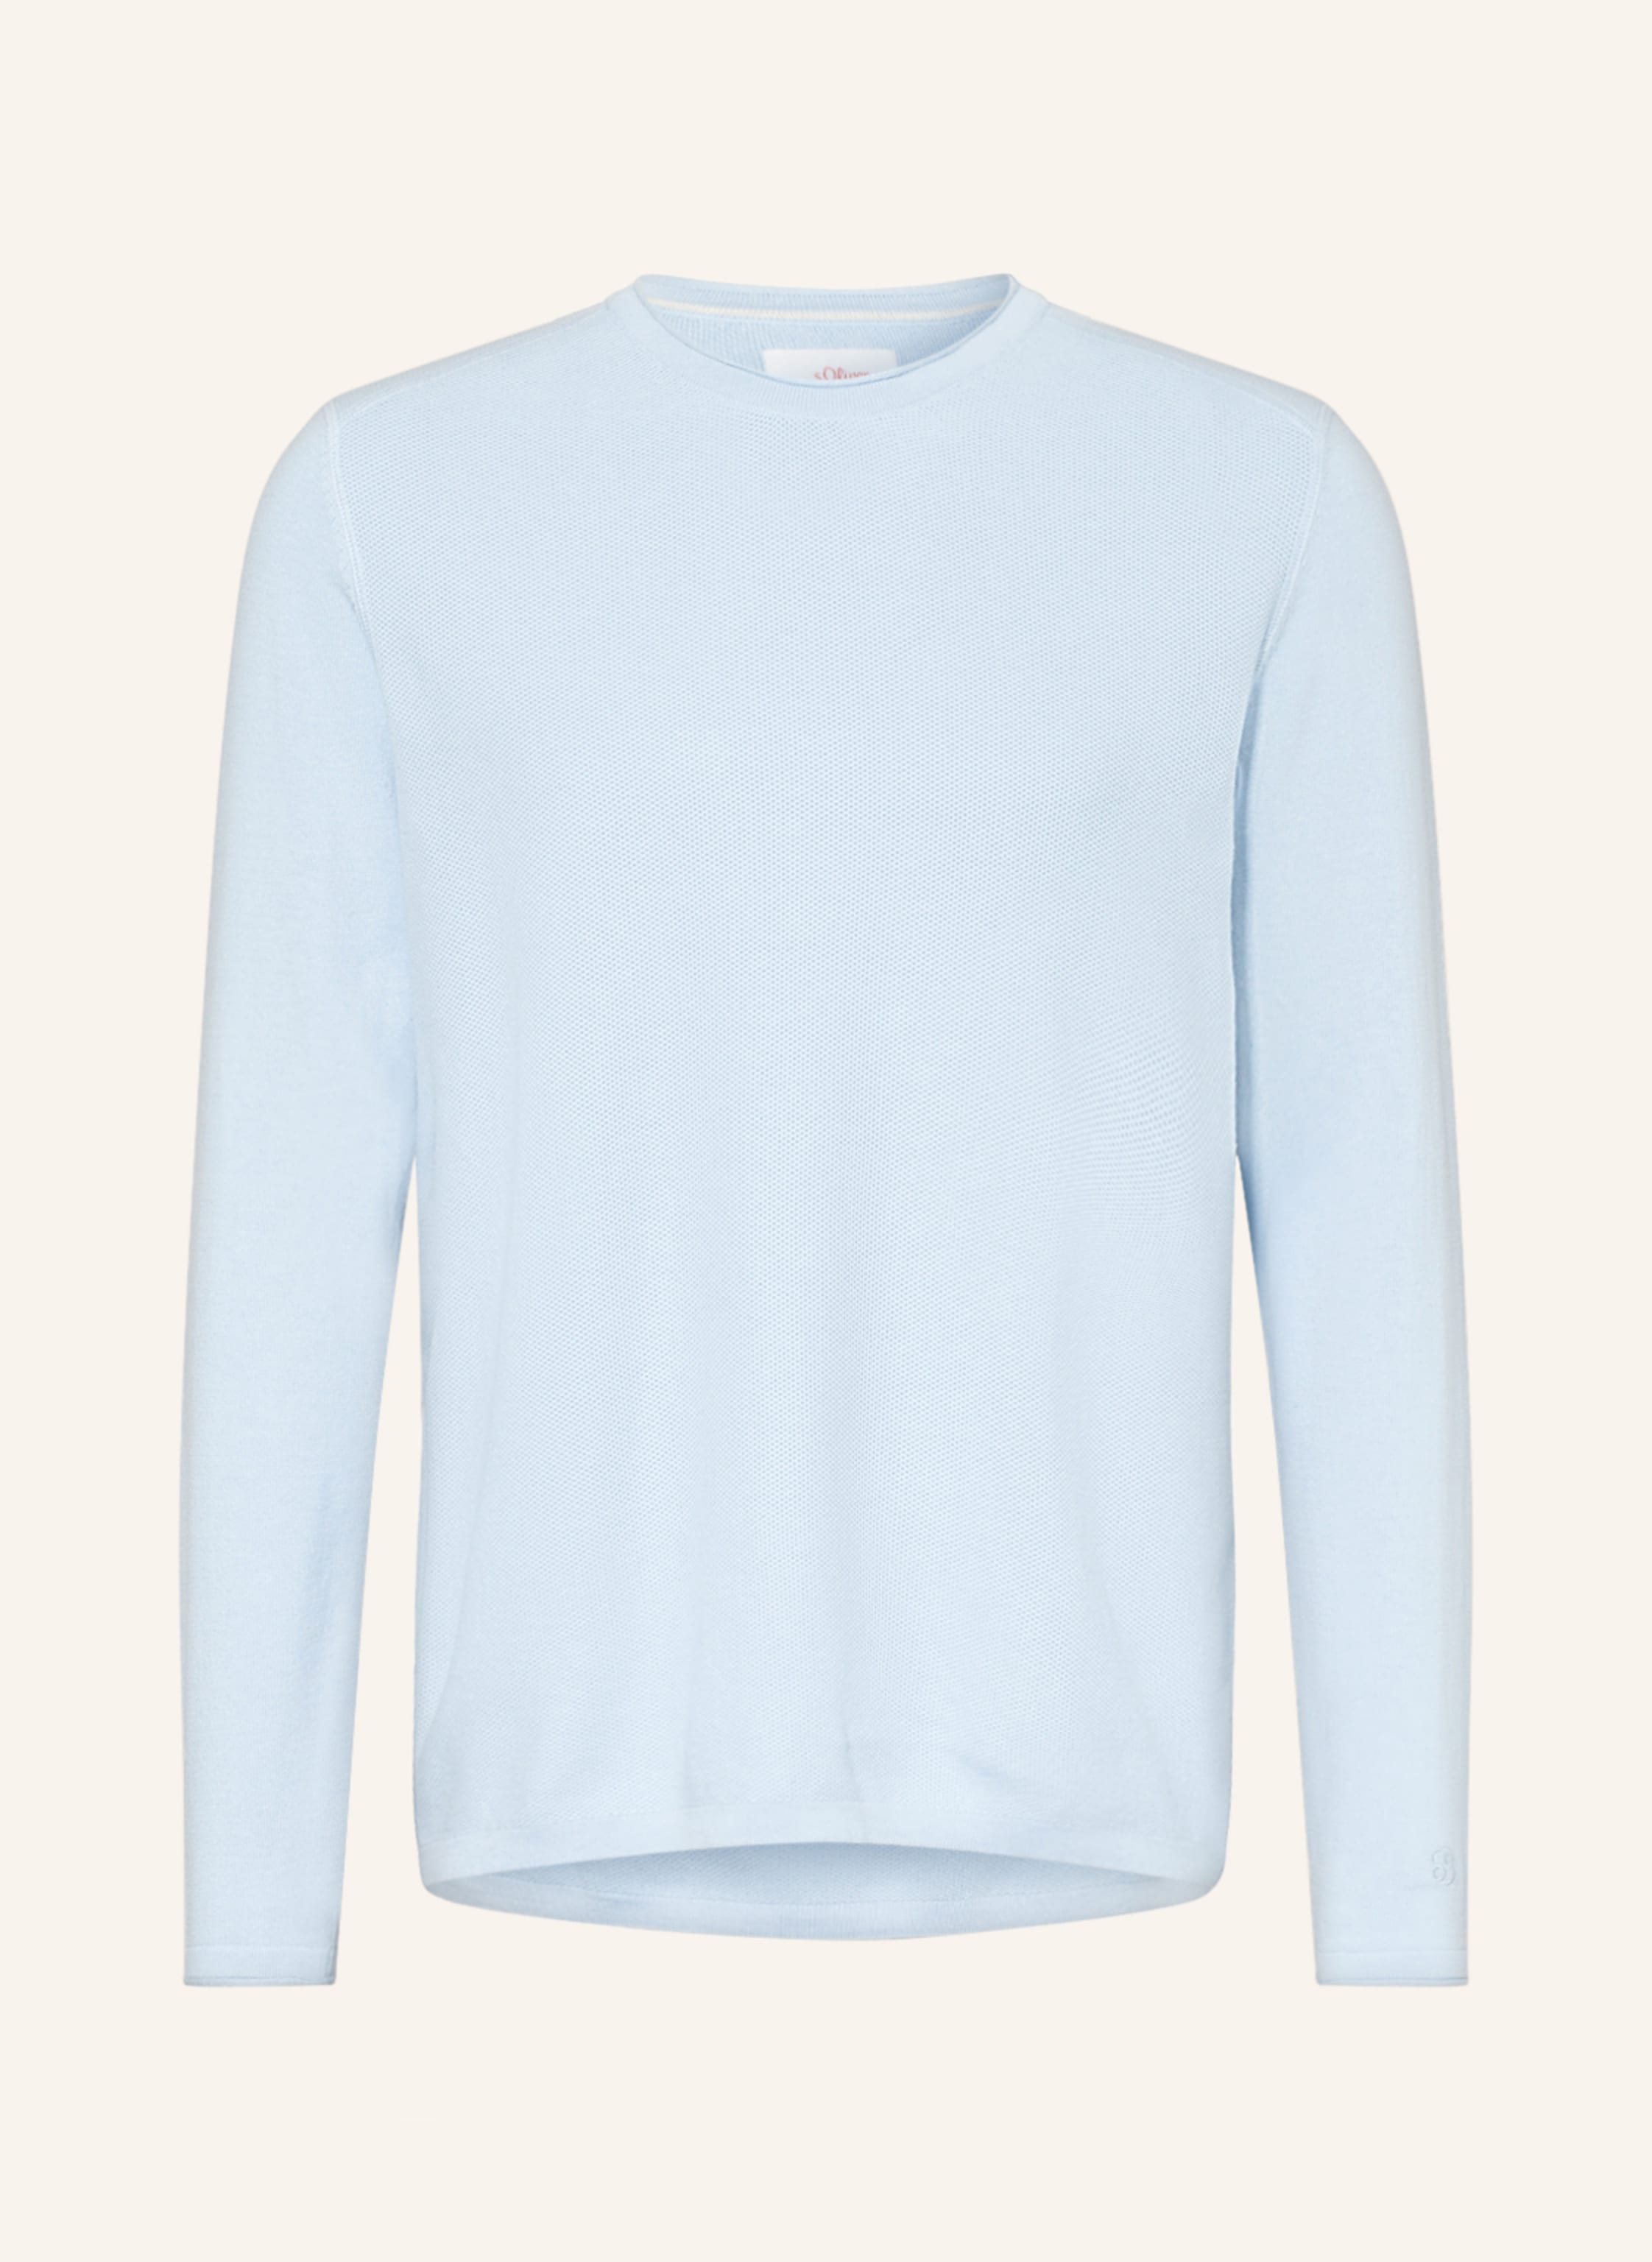 s.Oliver Sweater in light blue | Breuninger